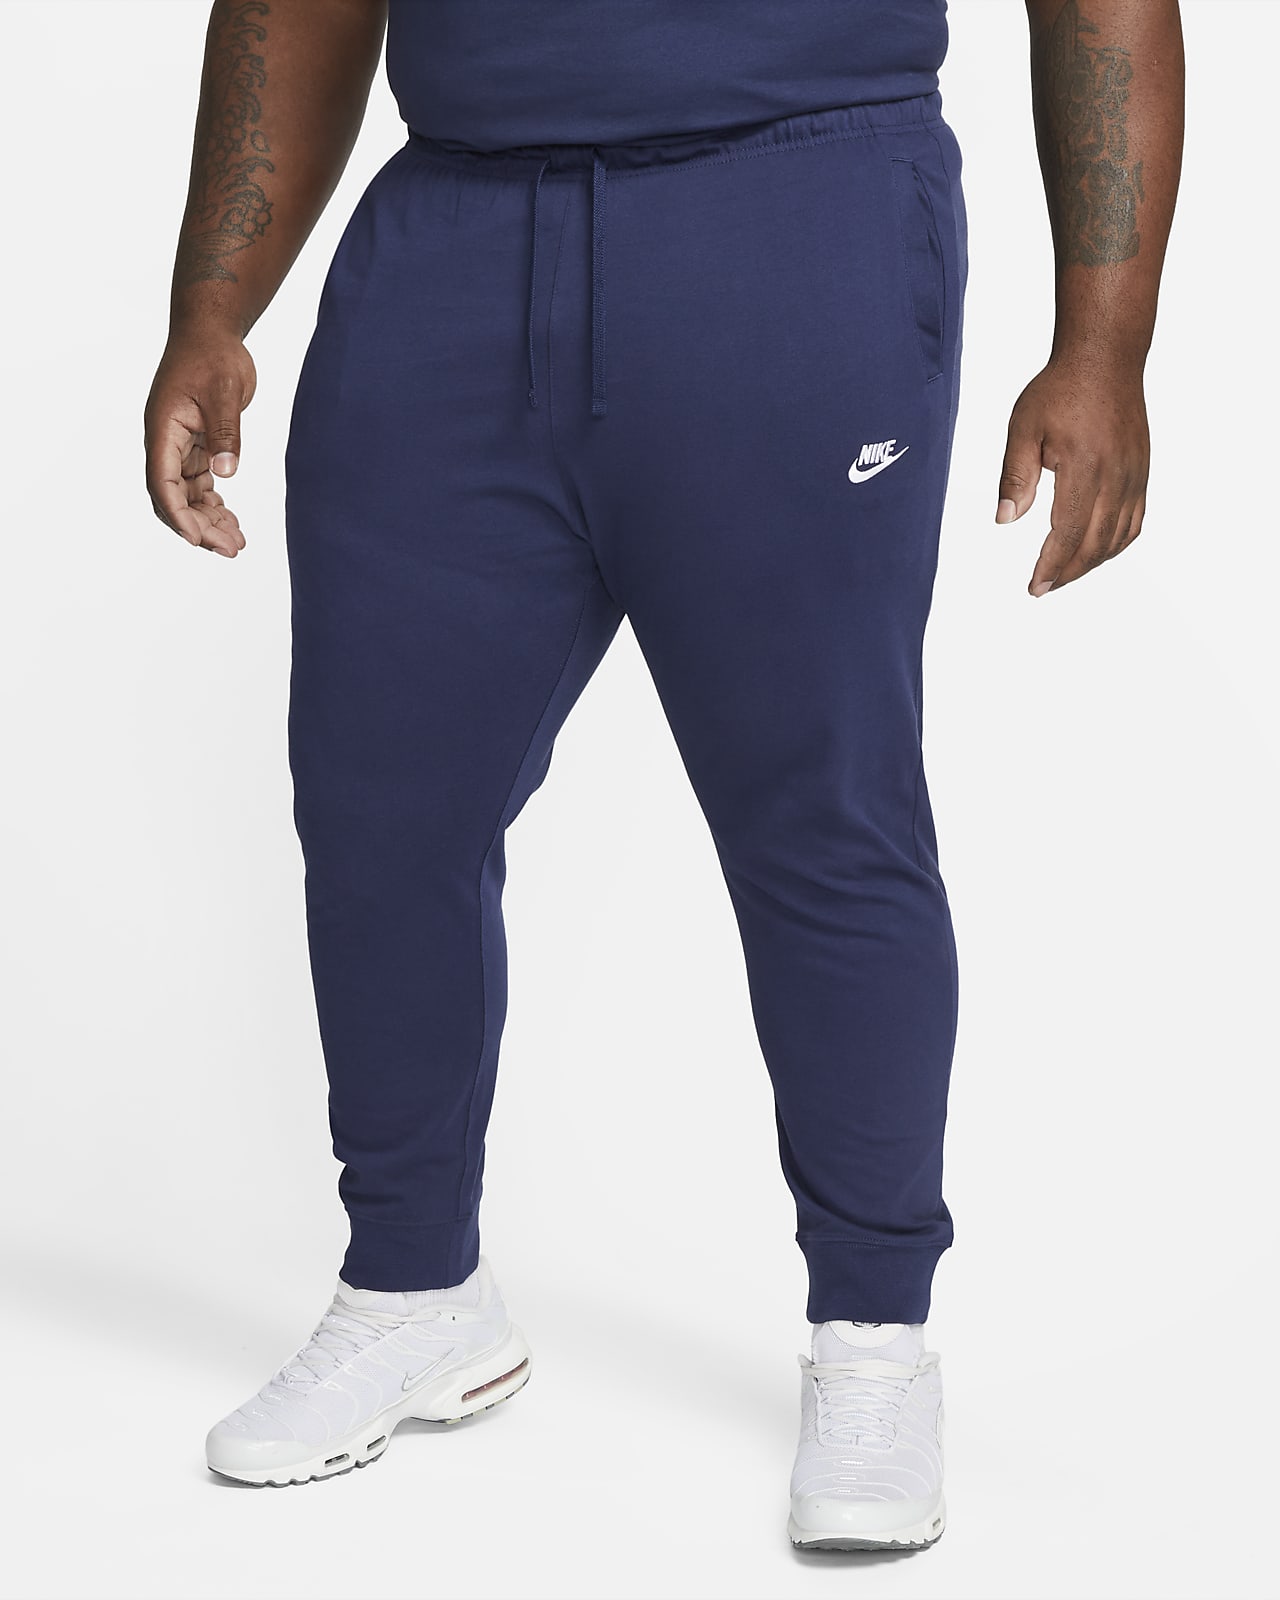 Men's Joggers & Sweatpants. Nike FI